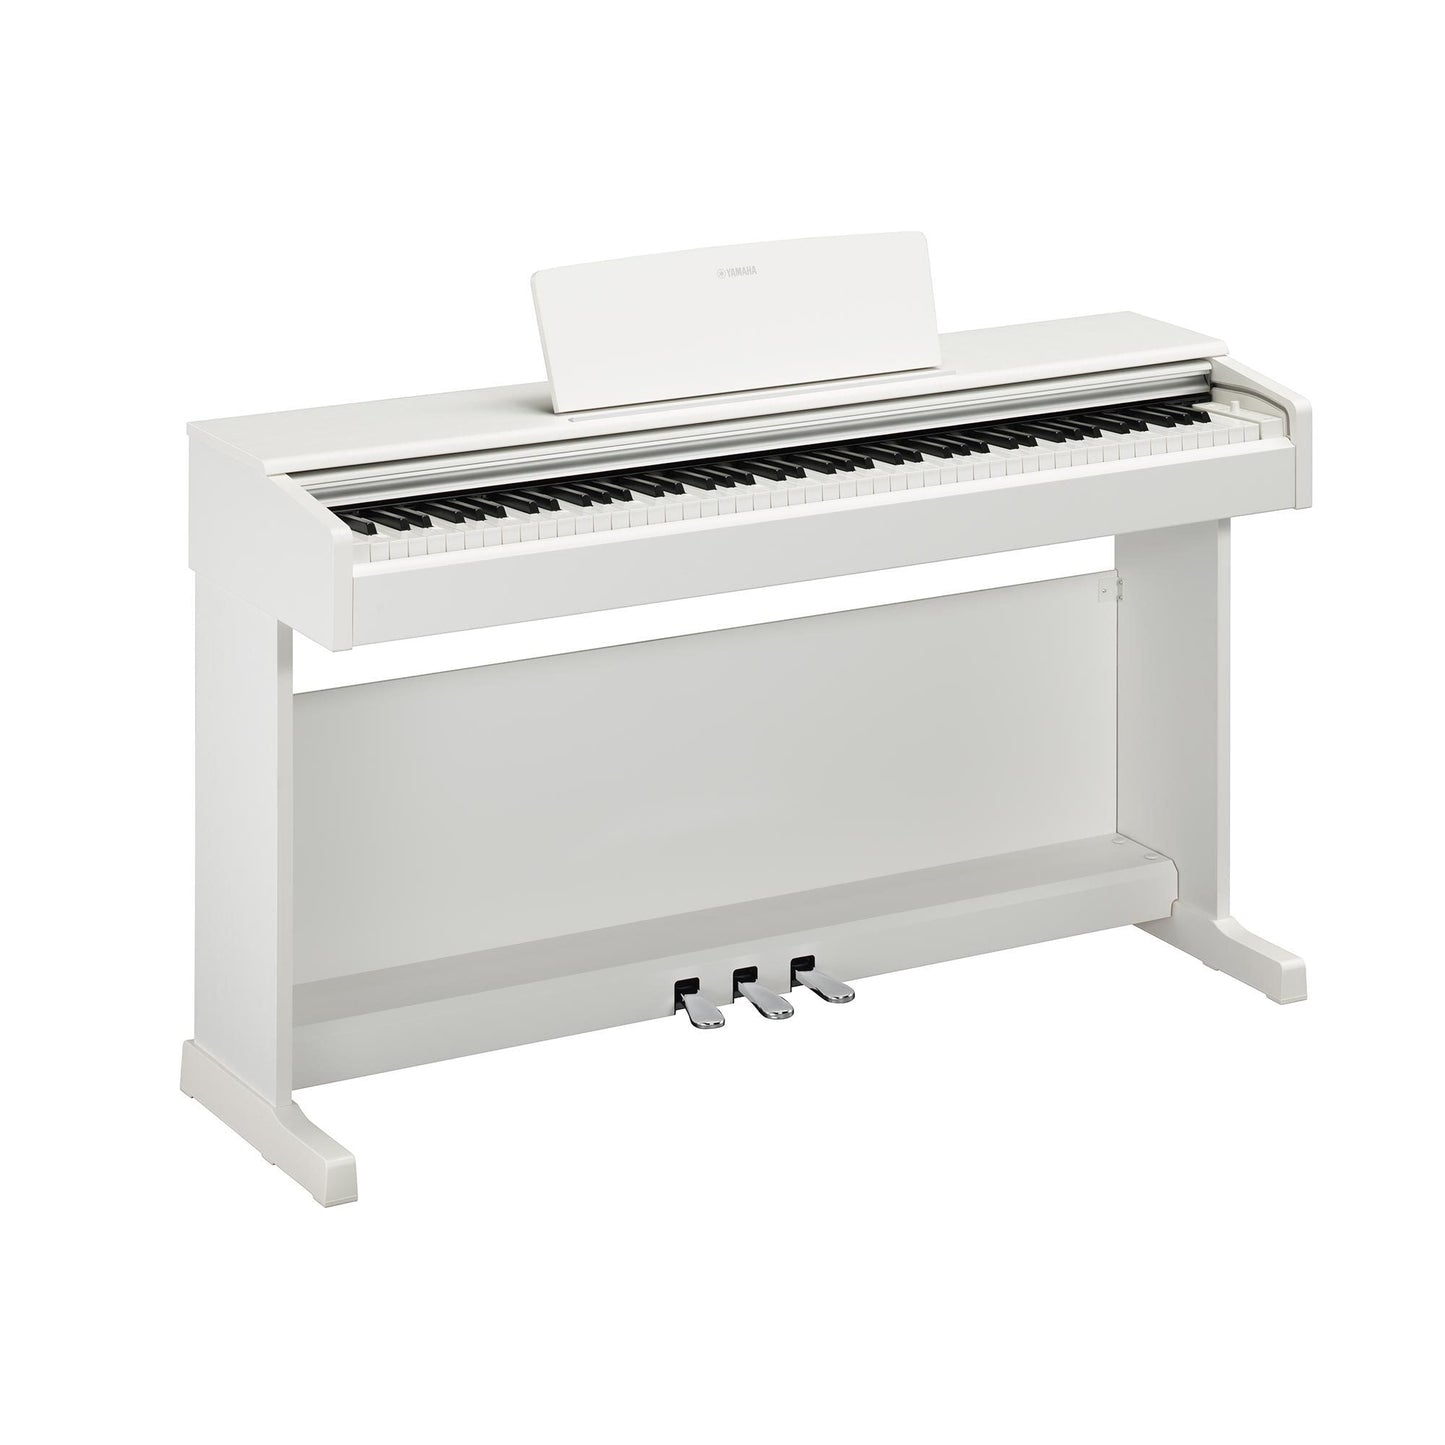 SALE - EX-DISPLAY: Yamaha ARIUS YDP145 Digital Piano - BEAUTIFUL, POWERFUL SOUND SAMPLED FROM THE ACCLAIMED YAMAHA CFX CONCERT GRAND PIANO